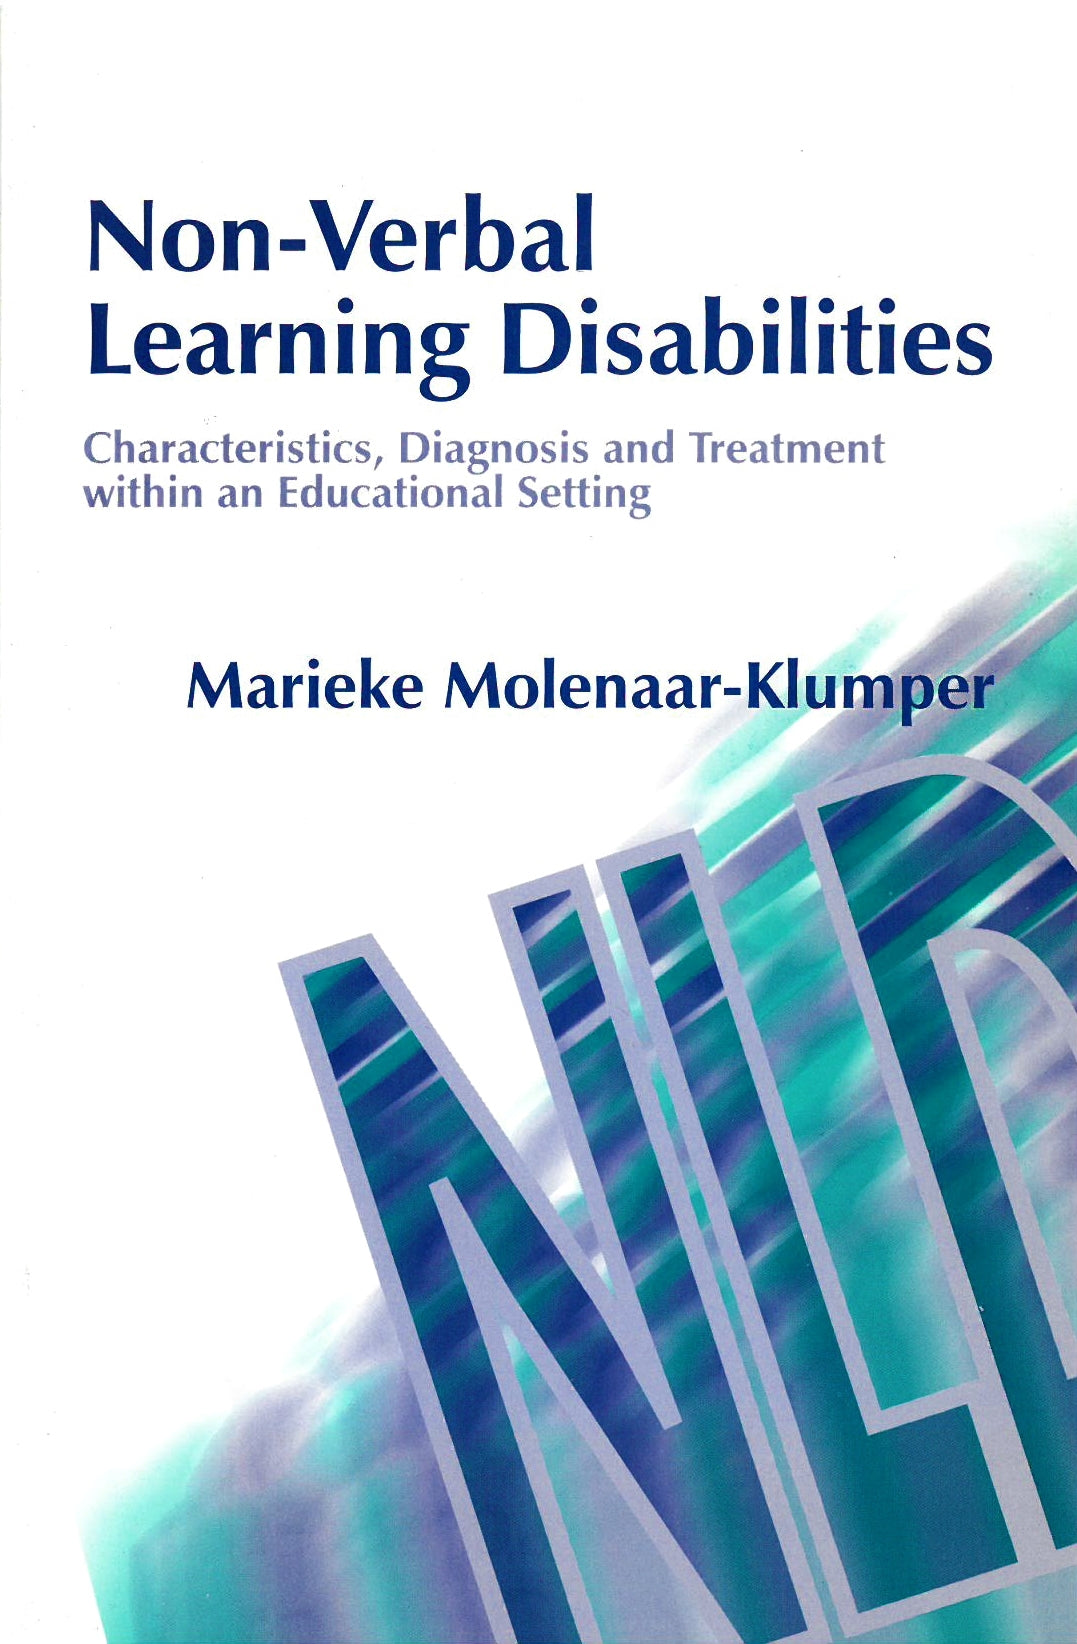 Non-Verbal Learning Disabilities by Marieke Molenaar-Klumper